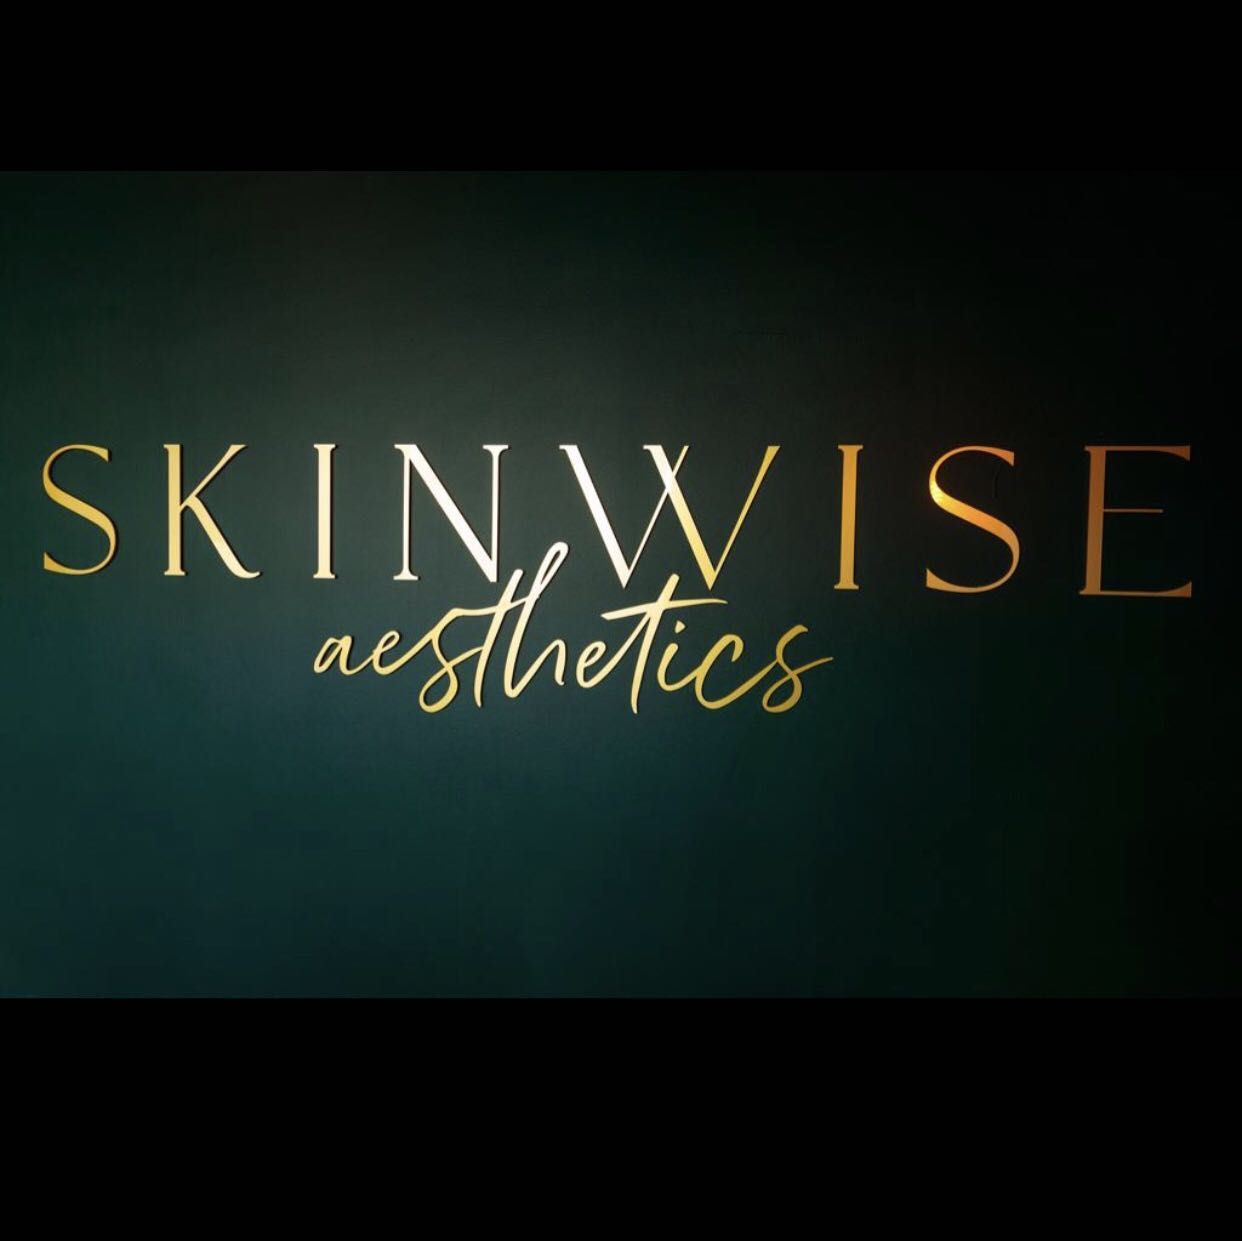 SkinWiseAesthetics, 88 George's Street Upper, 2, Dun Laoghaire